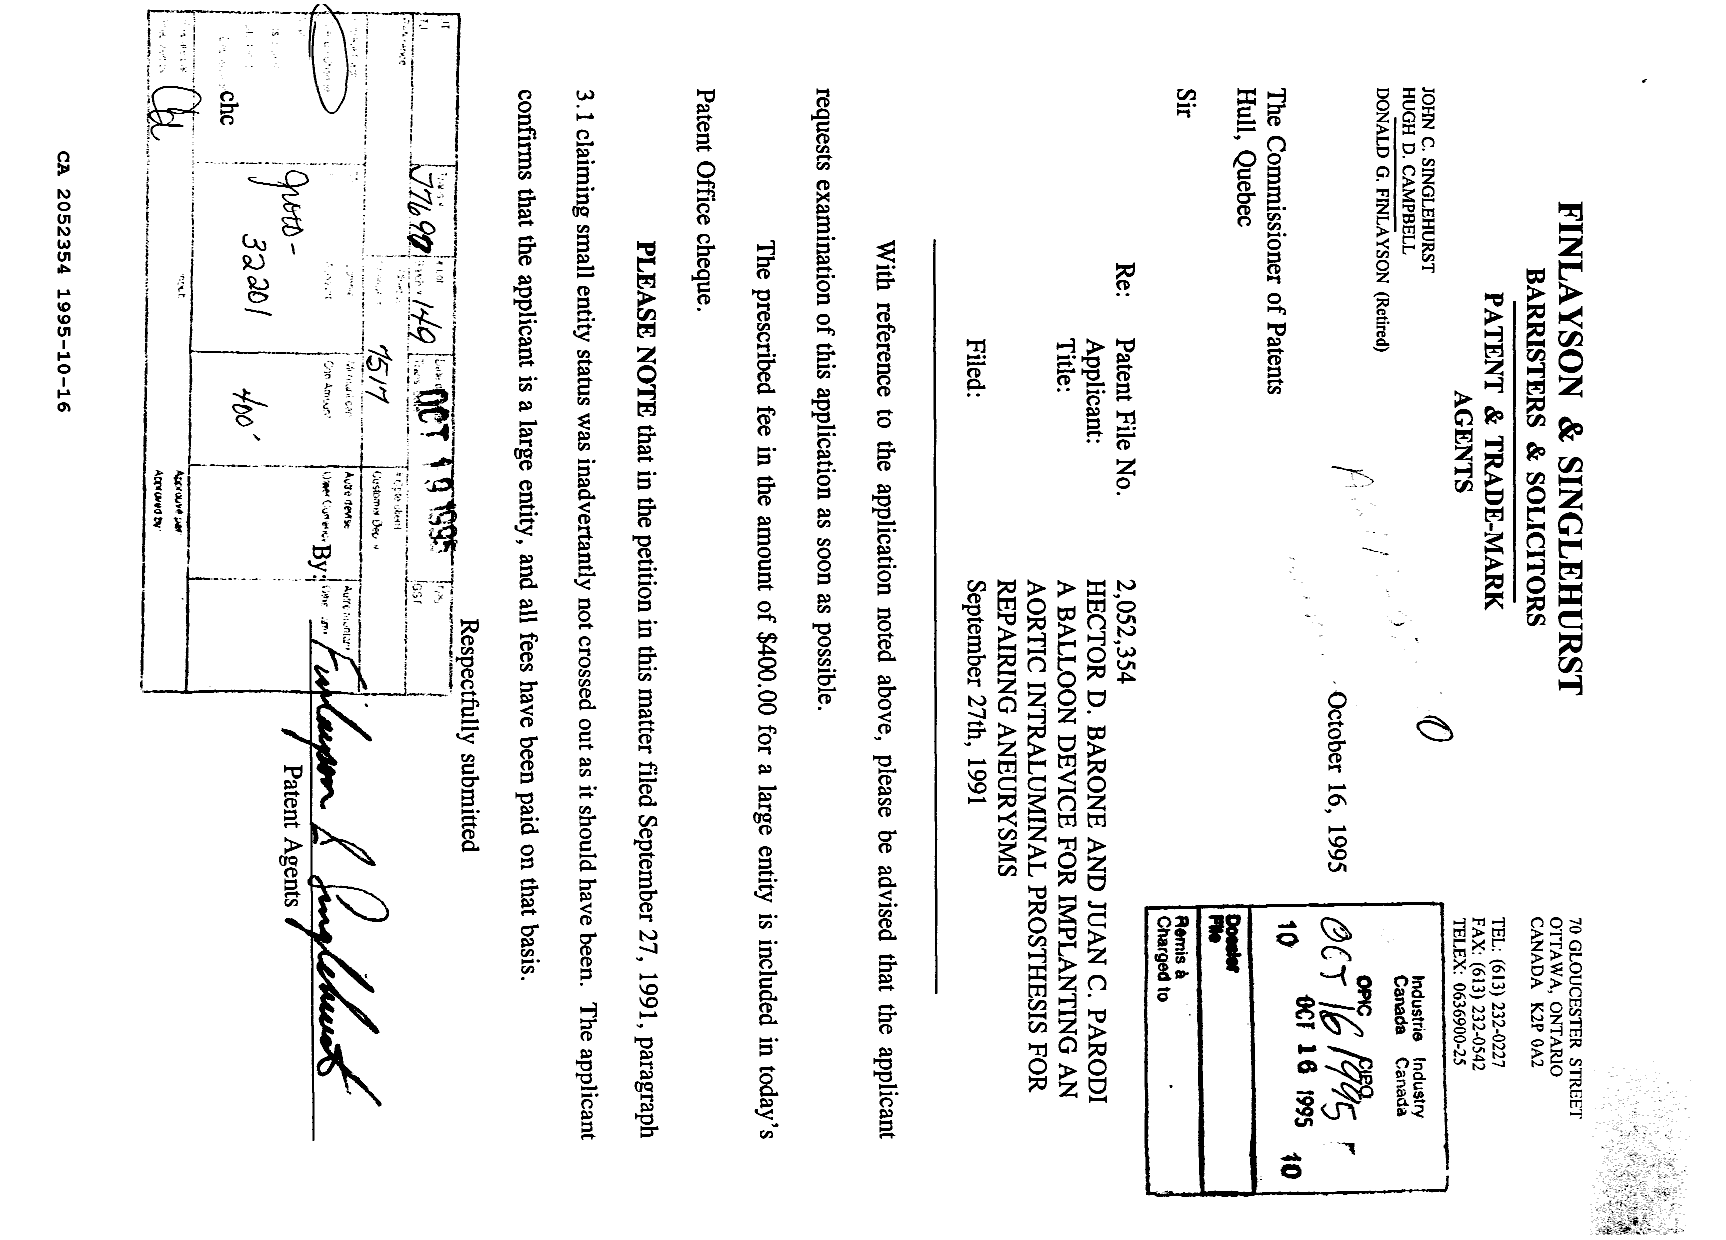 Canadian Patent Document 2052354. Prosecution Correspondence 19951016. Image 1 of 1